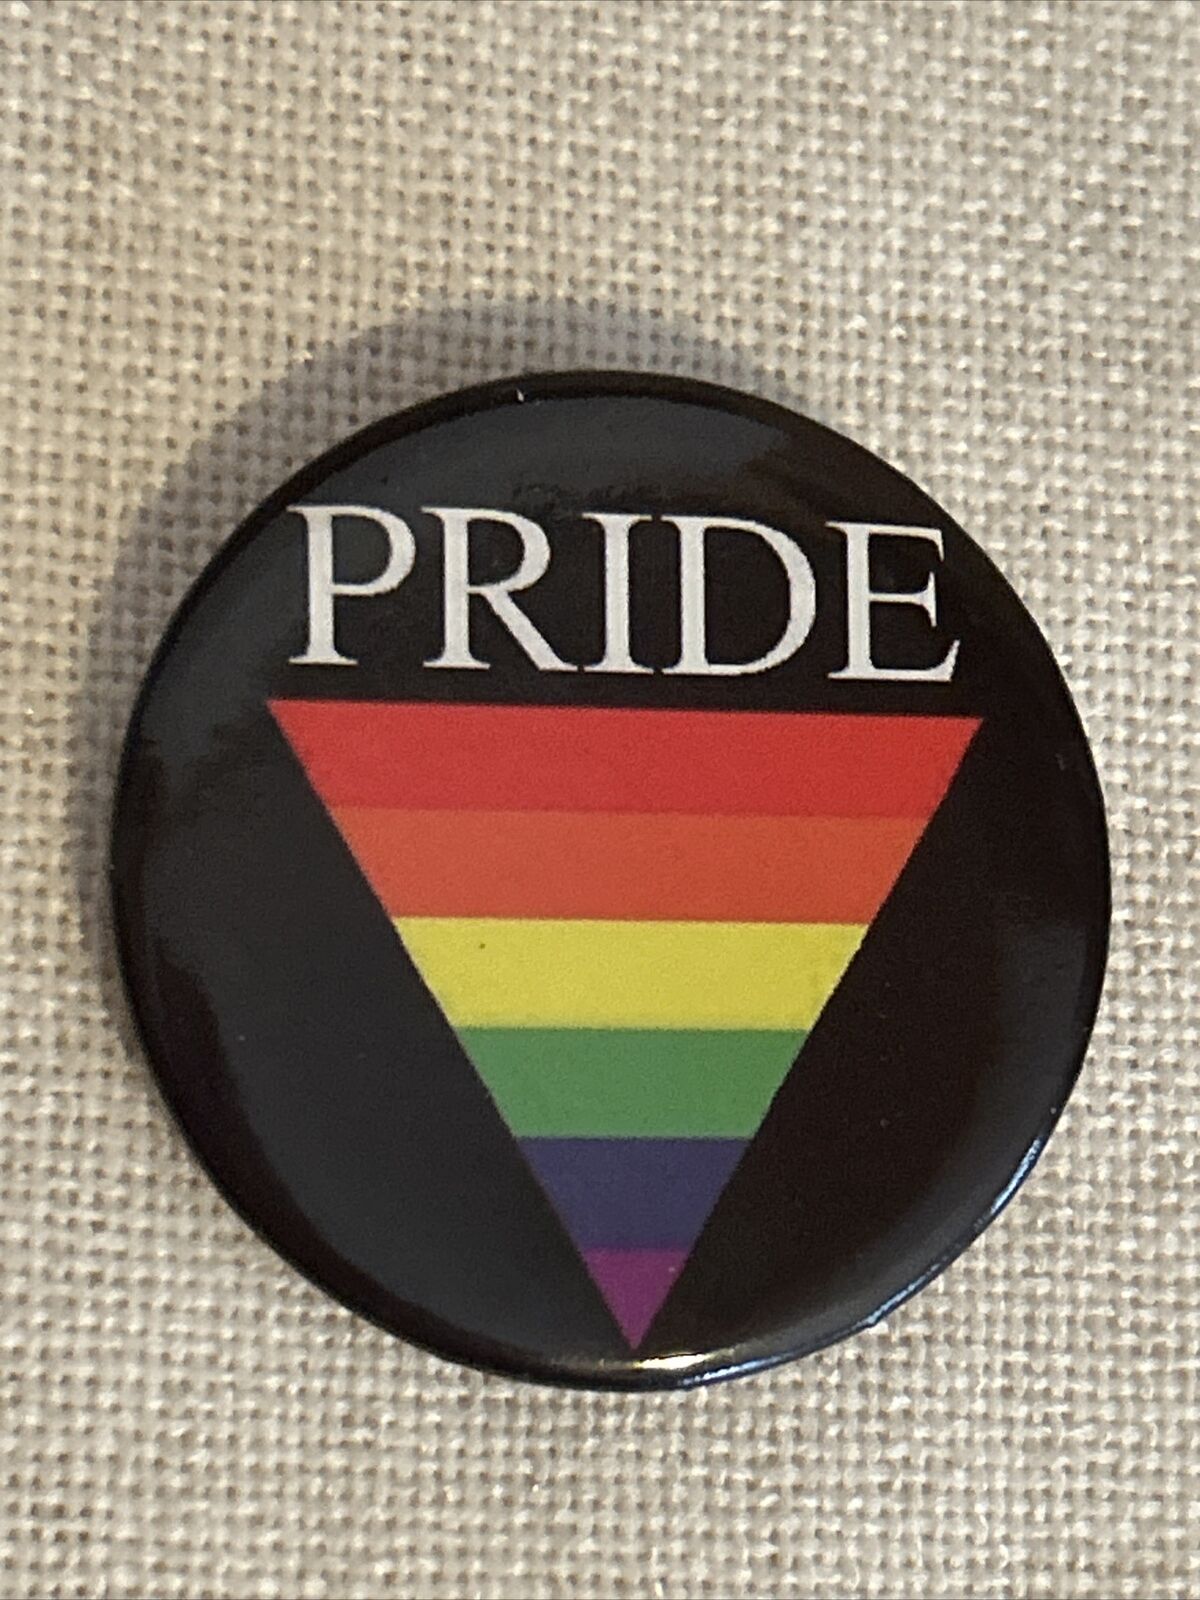 LGBT Pin “PRIDE”, RAINBOW UNIQUE PIN 2x2